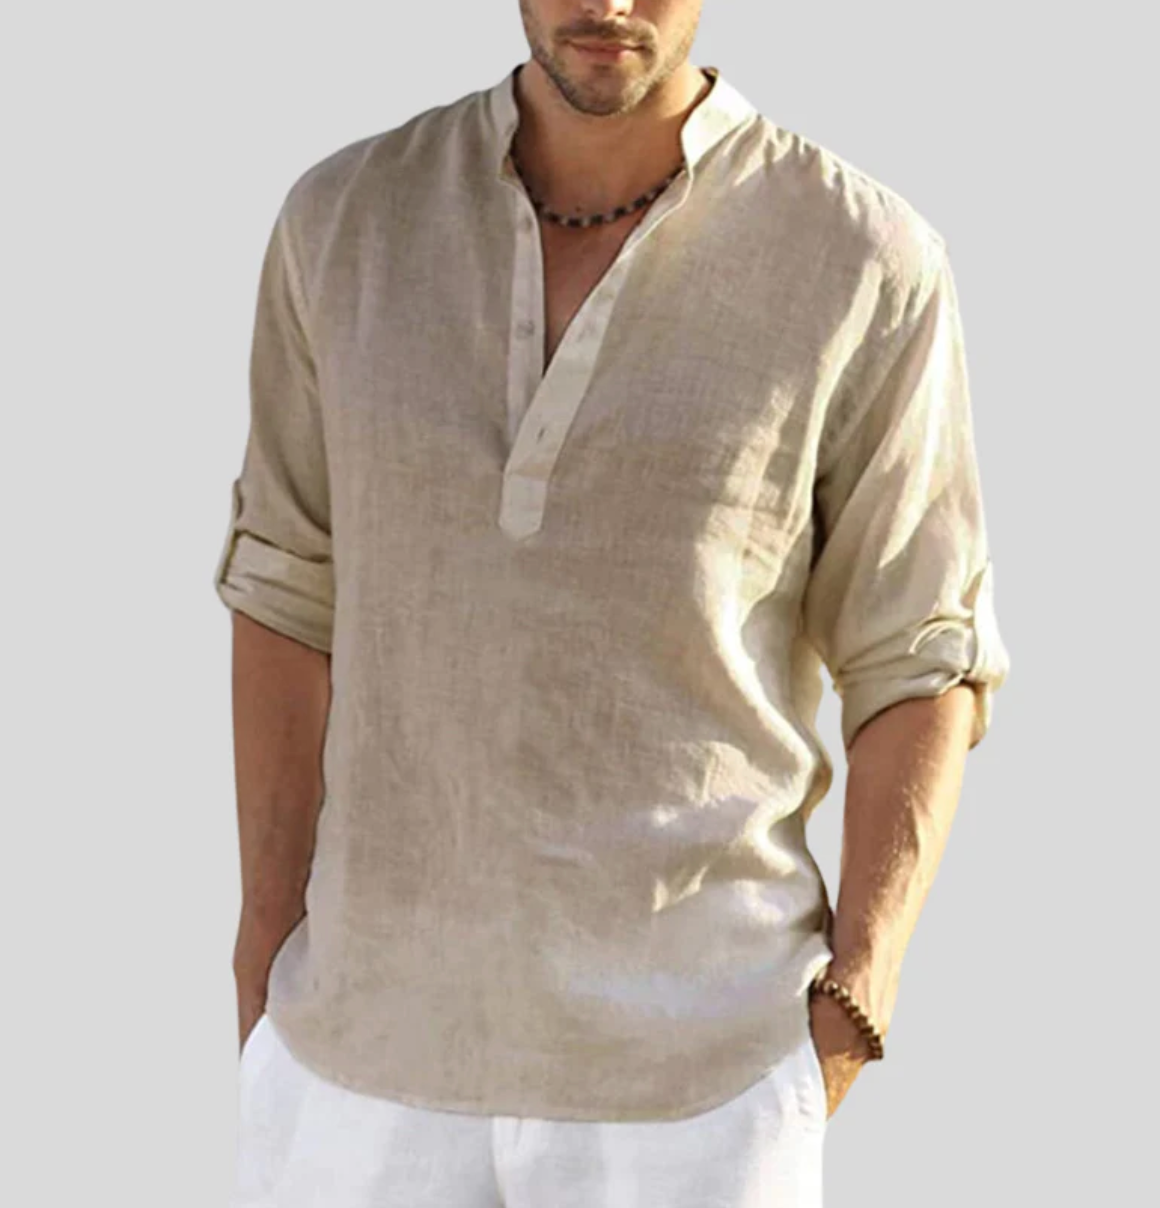 ADRIANO - Elegant linen shirt with collar 